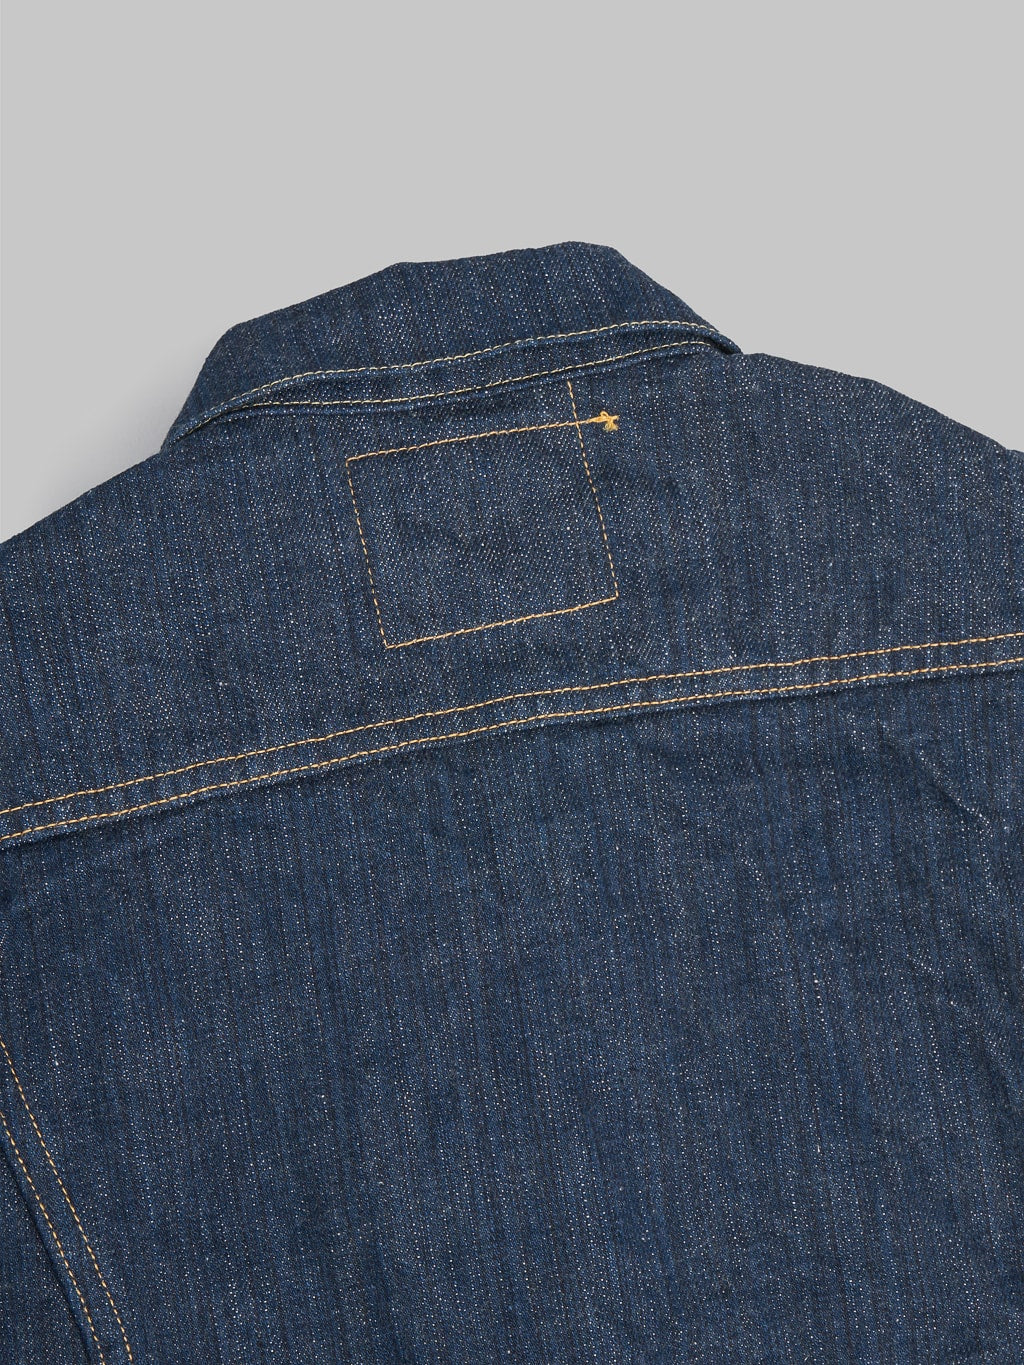 oni denim kiwami 16oz natural indigo type III jacket stitching